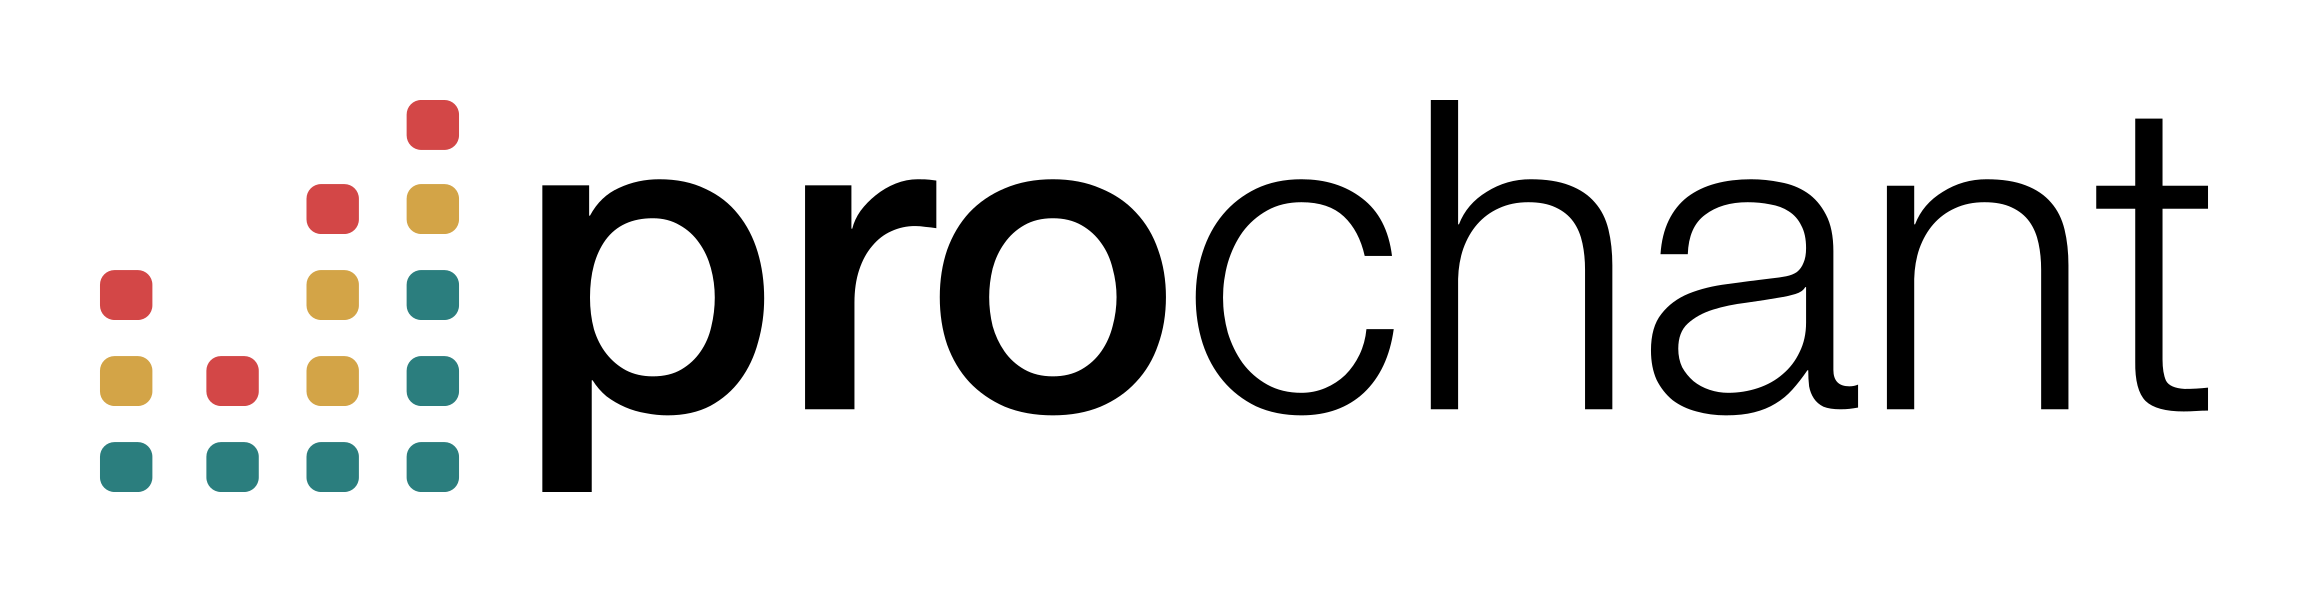 Prochant Logo